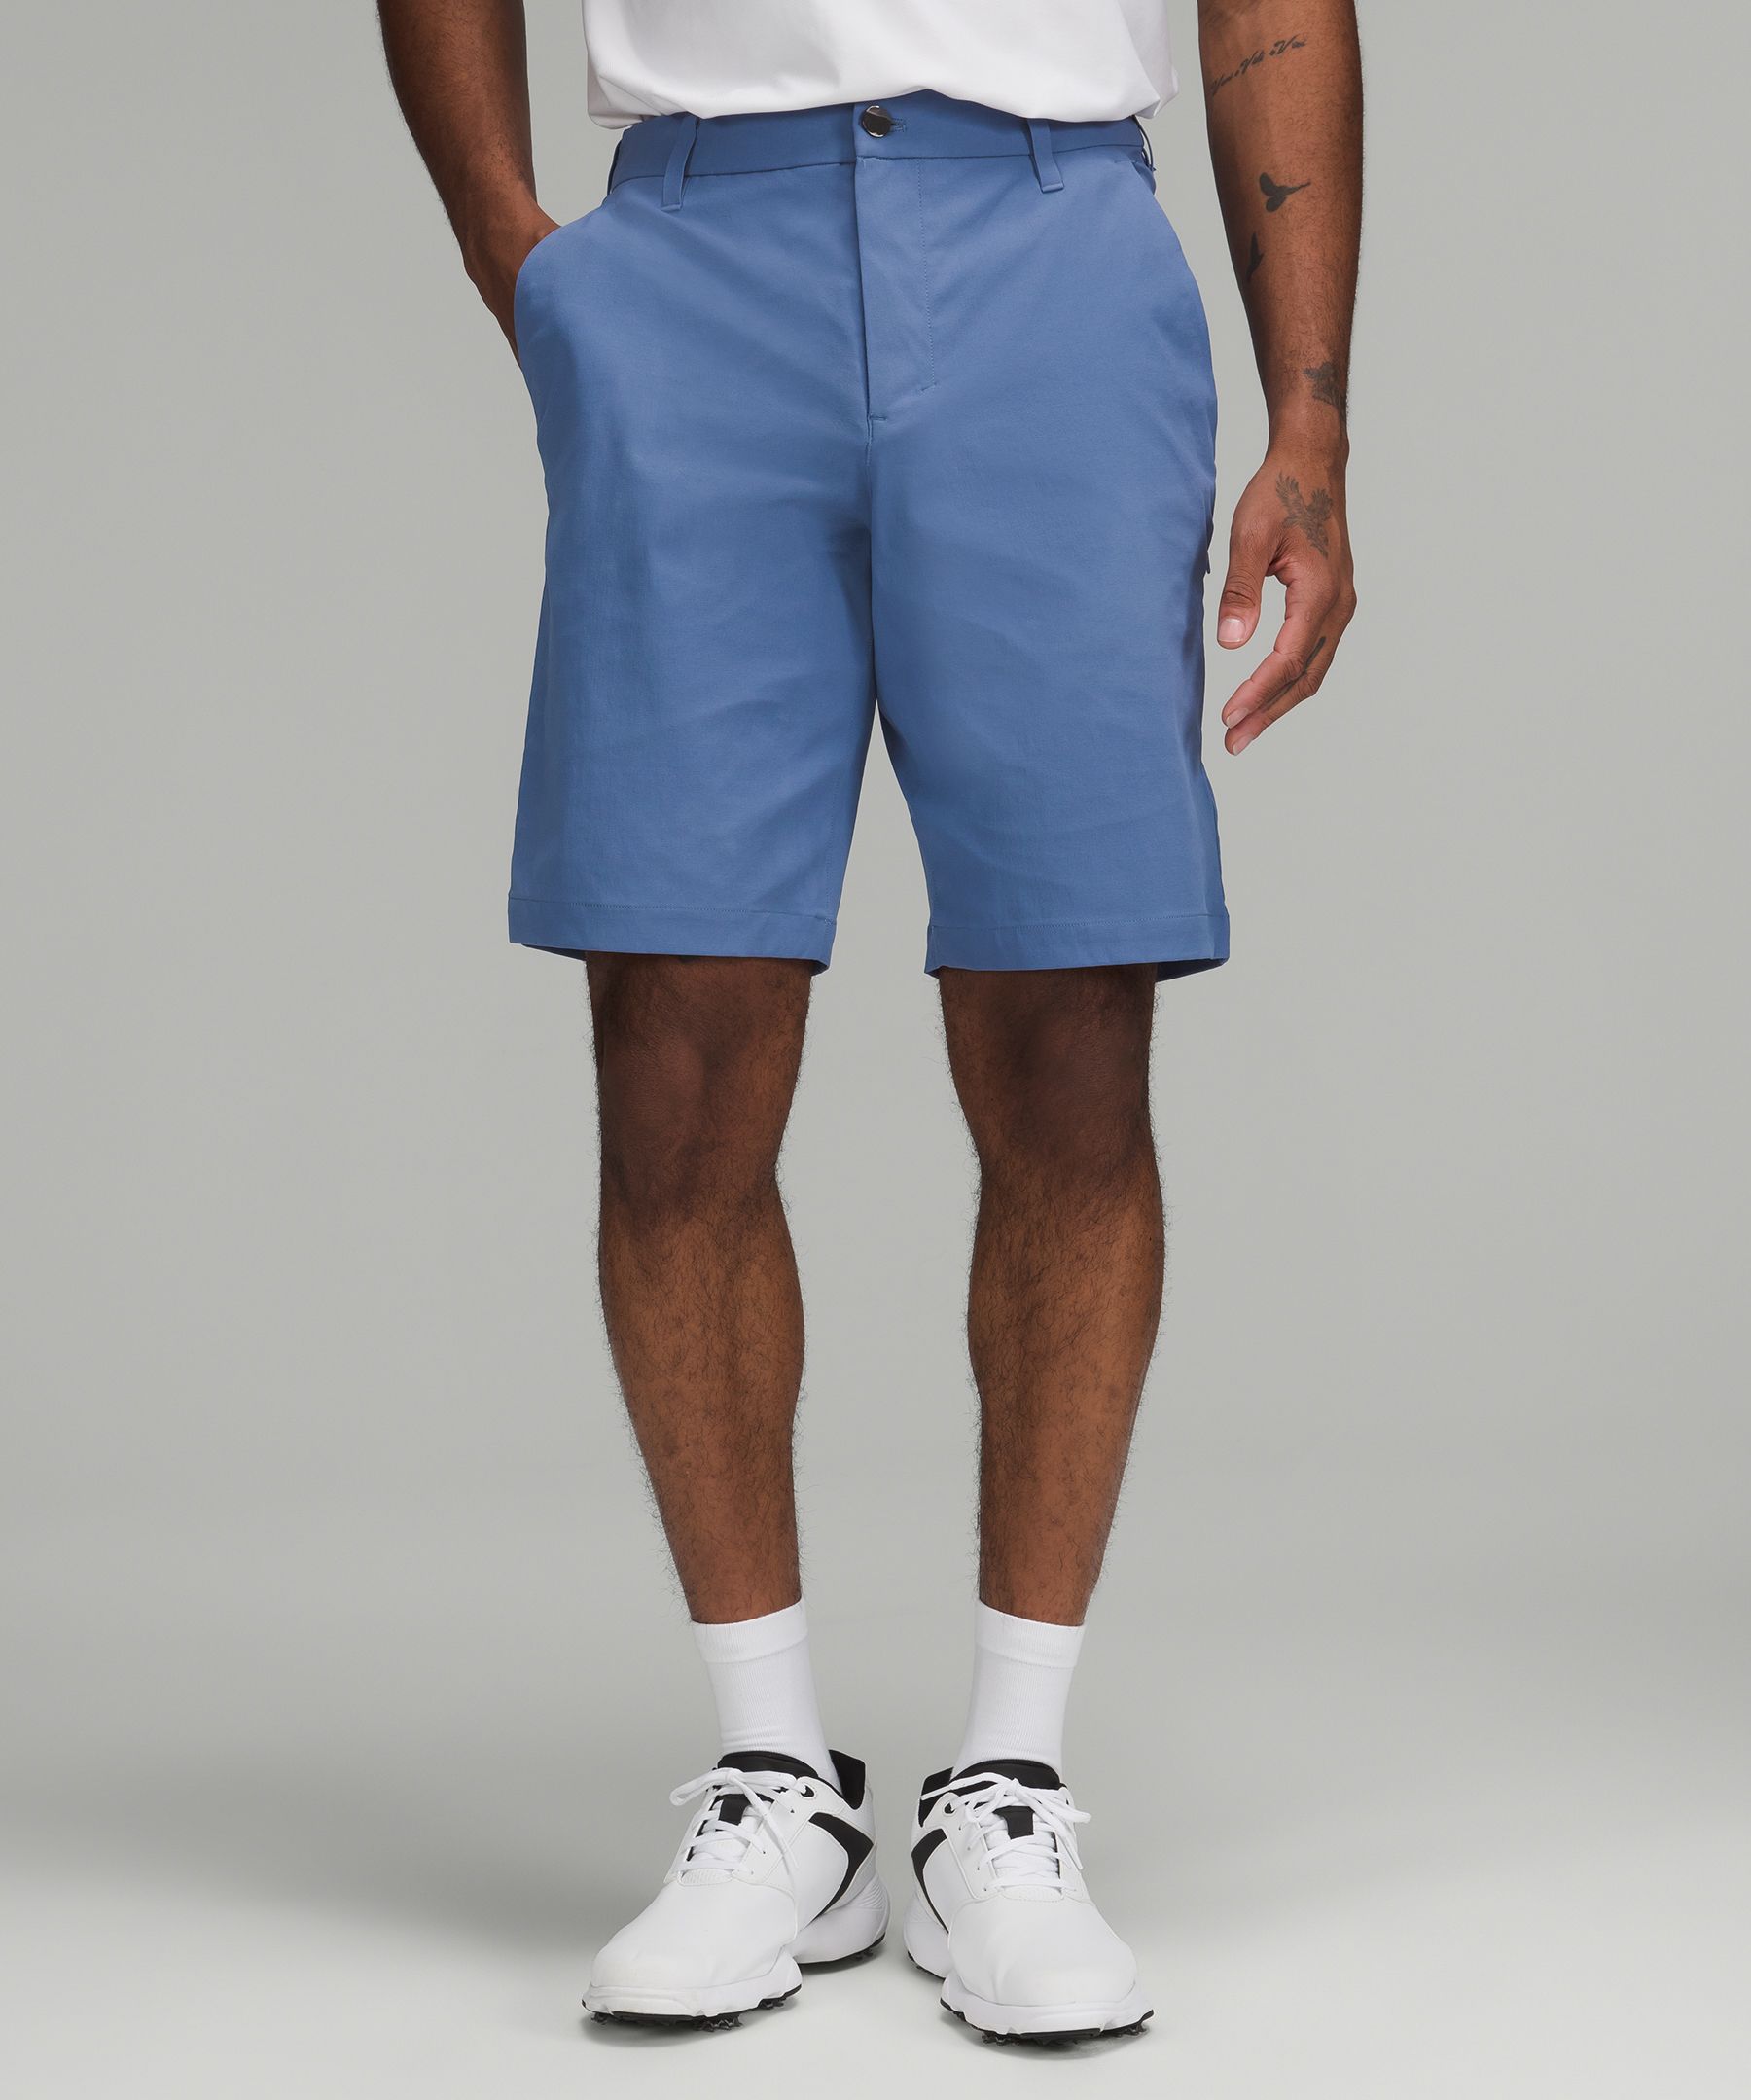 Men's Chino Shorts | lululemon